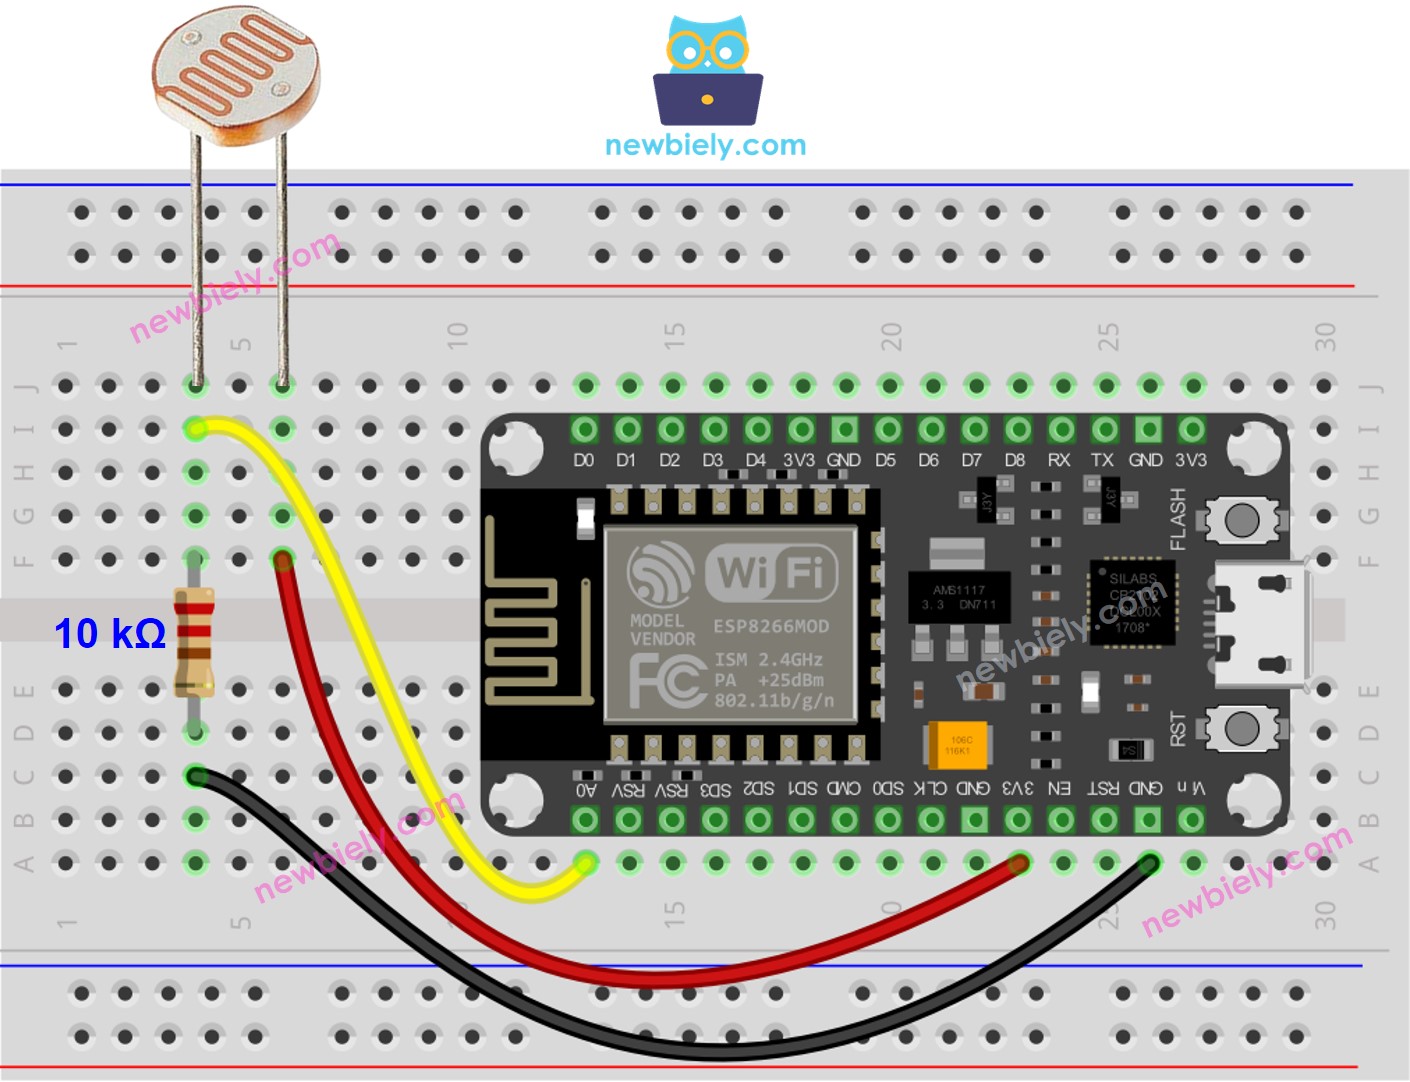 The wiring diagram between ESP8266 NodeMCU and Light Sensor